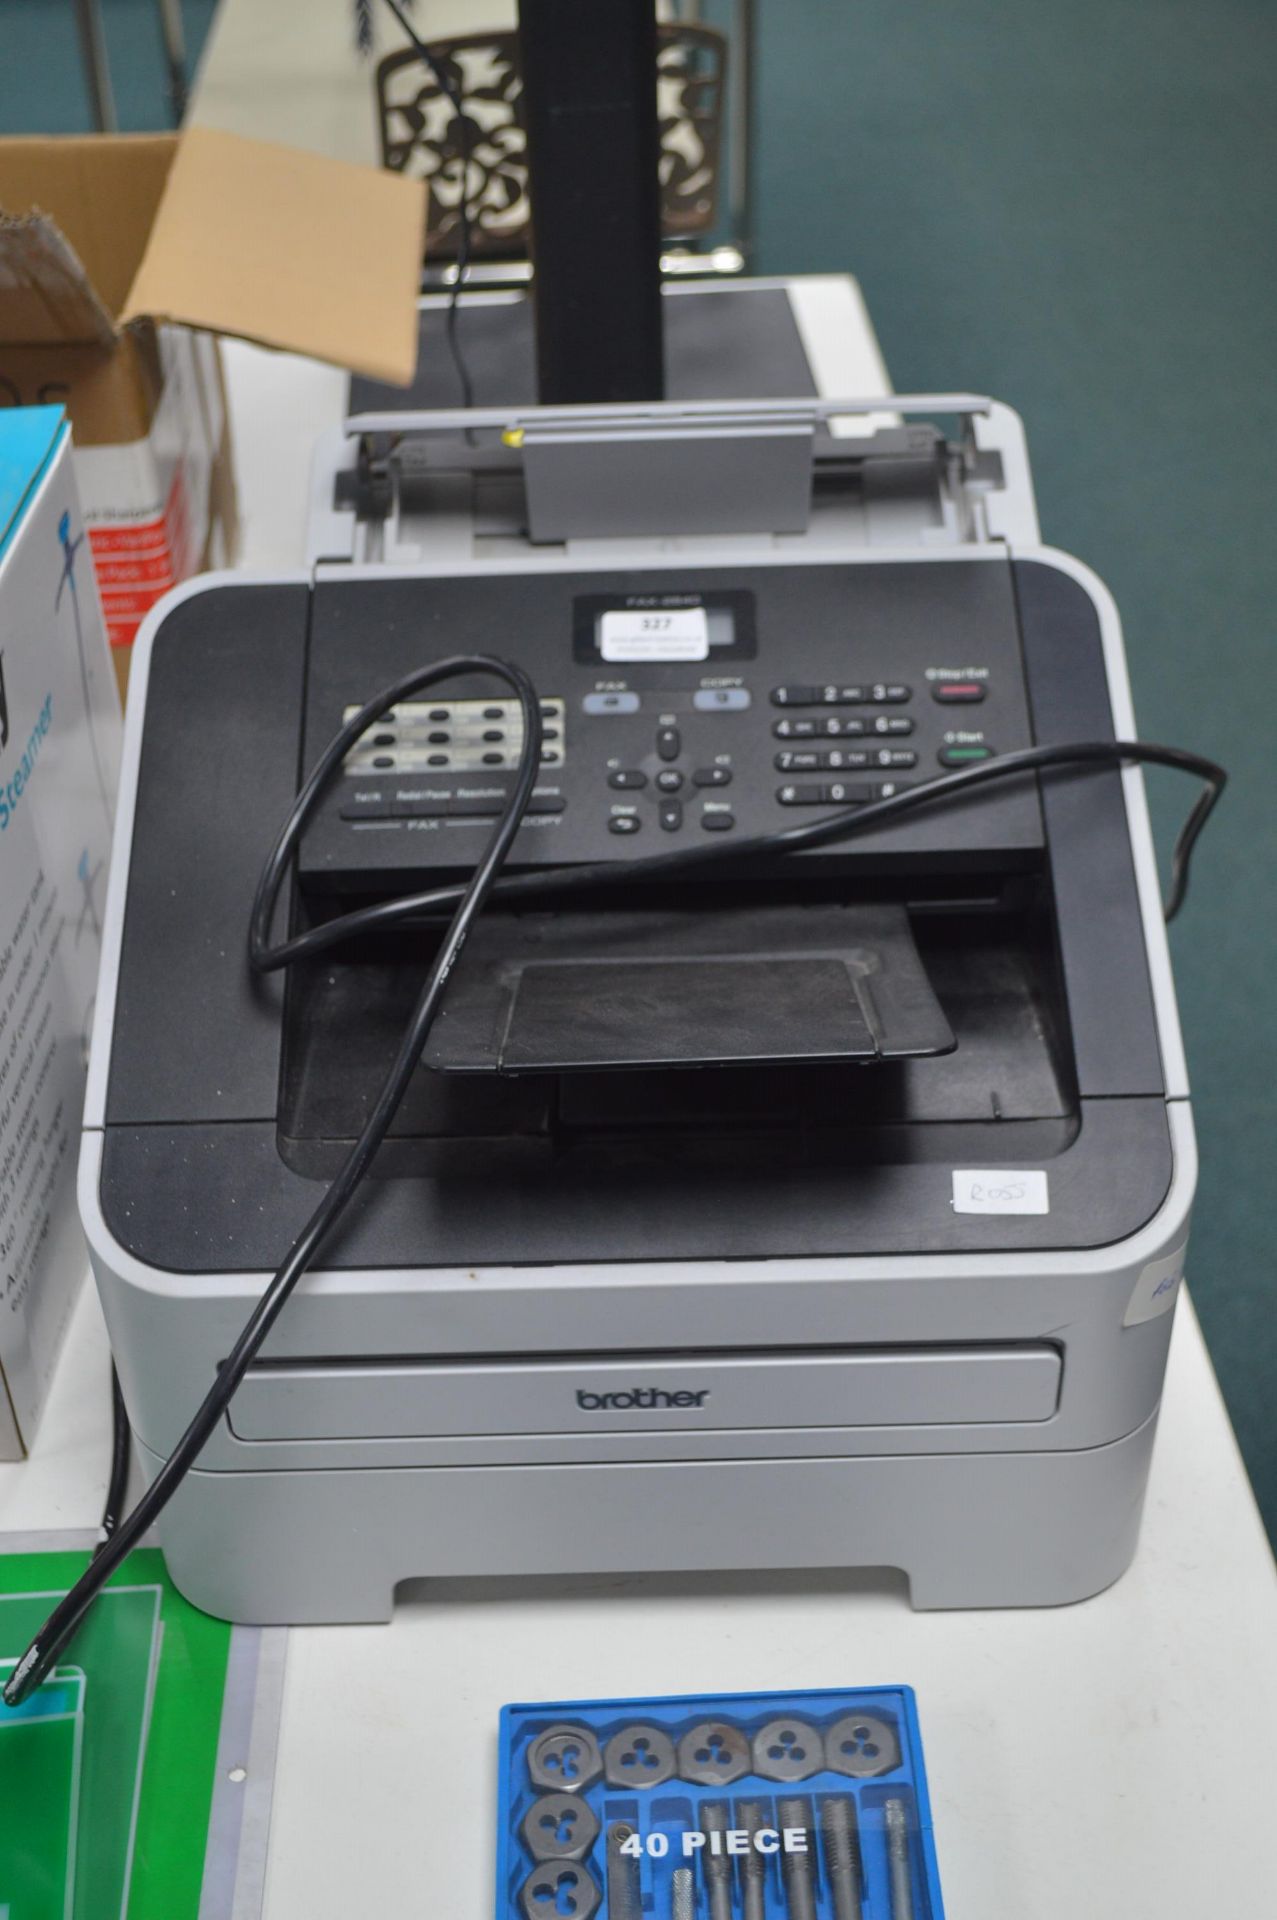 *Brother 2840 Fax Machine